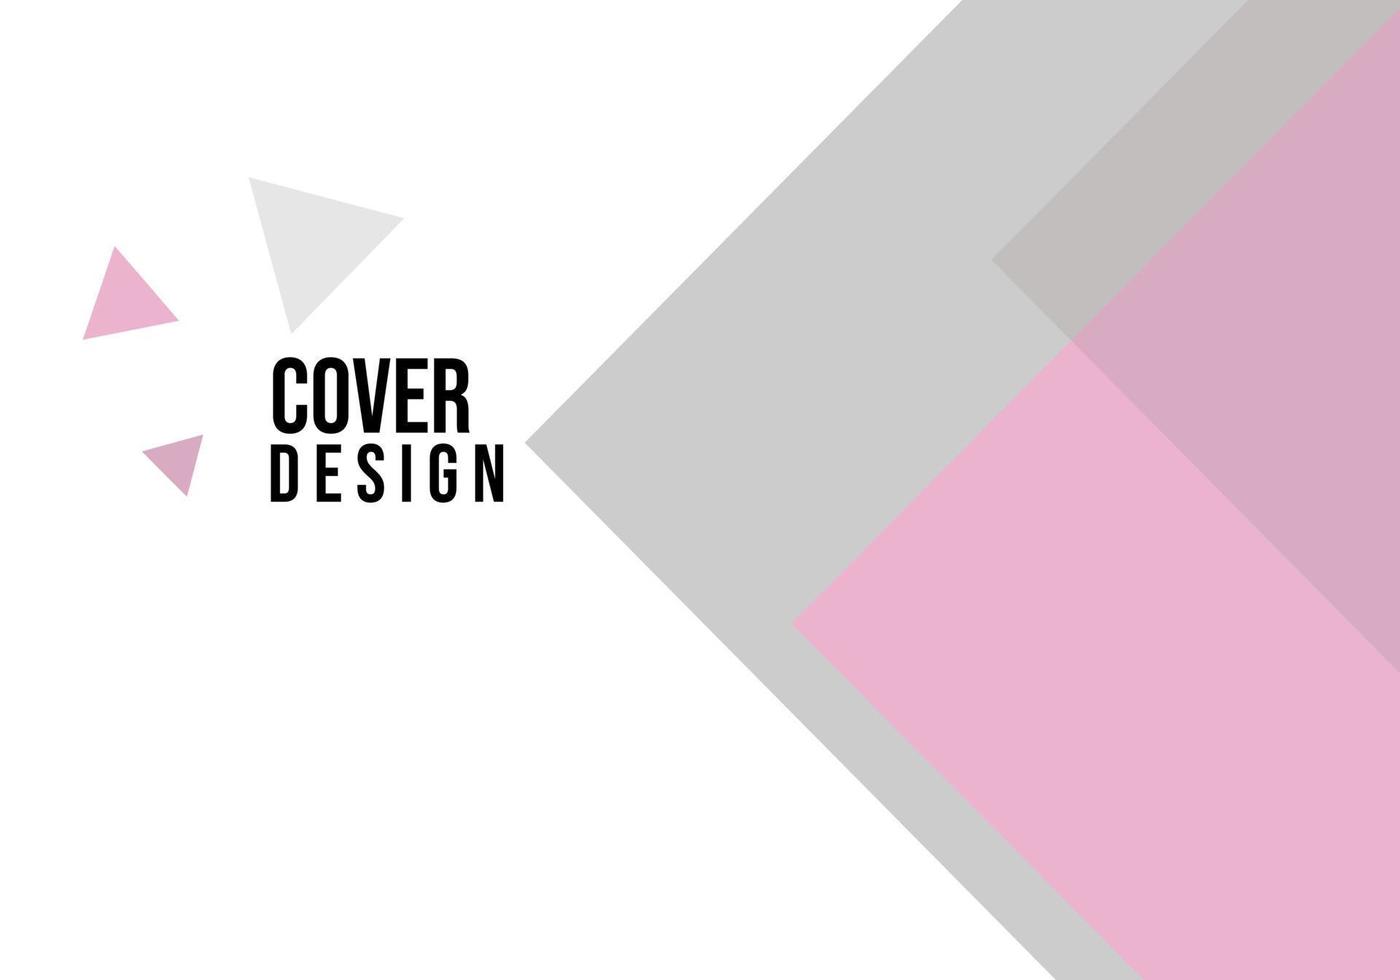 abstrato geométrico de cor pastel com elementos de forma de triângulo. design para site, banner, página de destino, capa vetor